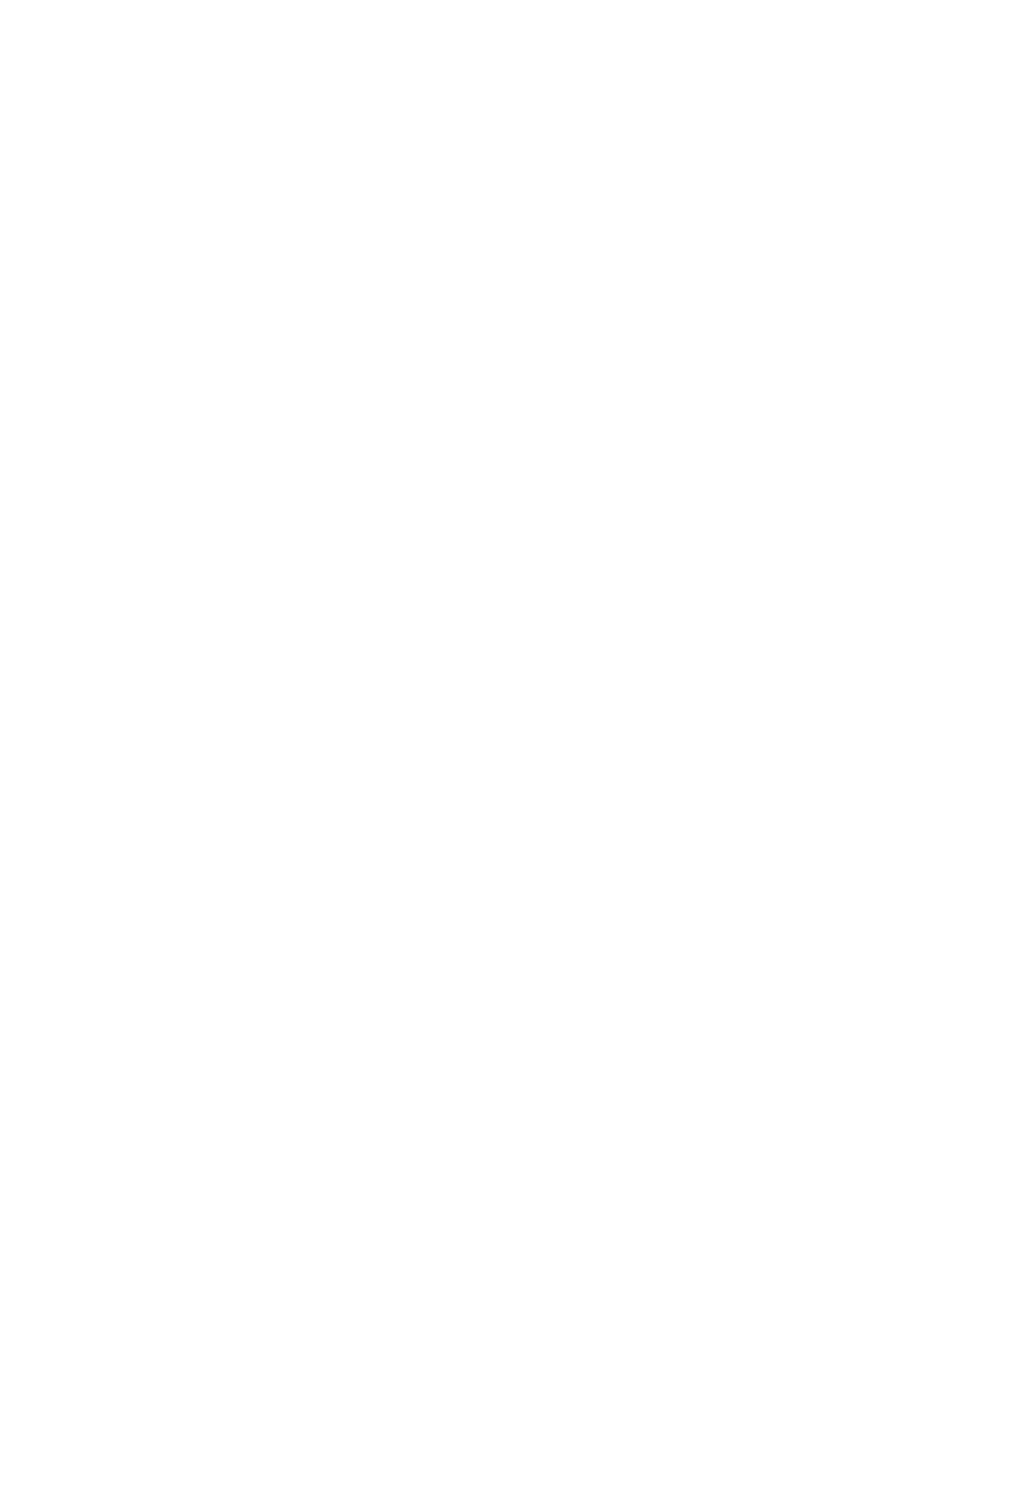 Central Plaza Hotel logo pour fonds sombres (PNG transparent)